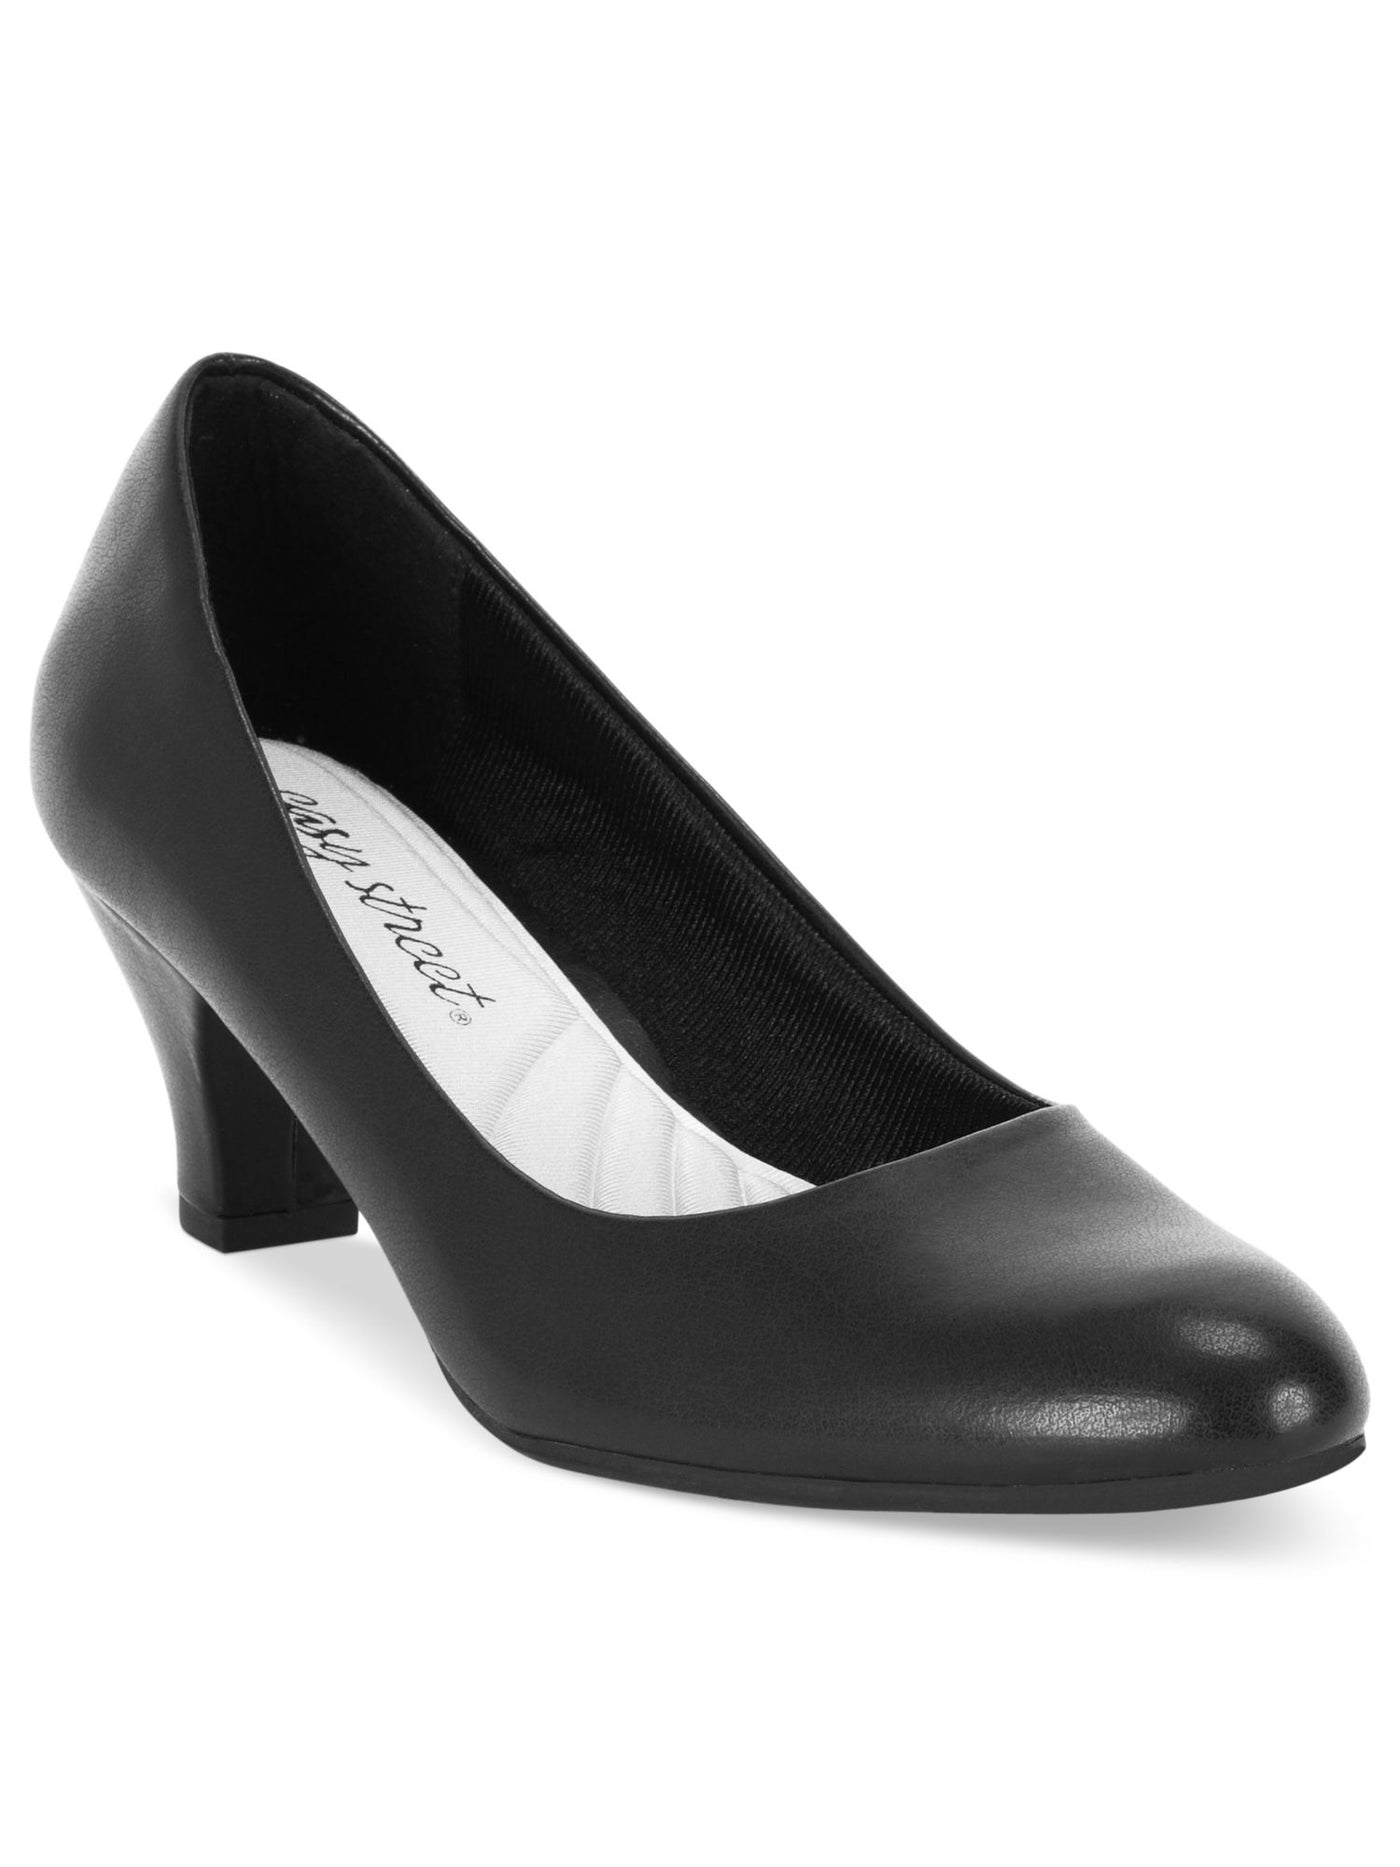 EASY STREET Womens Black Fabulous Almond Toe Block Heel Slip On Pumps Shoes 8.5 N